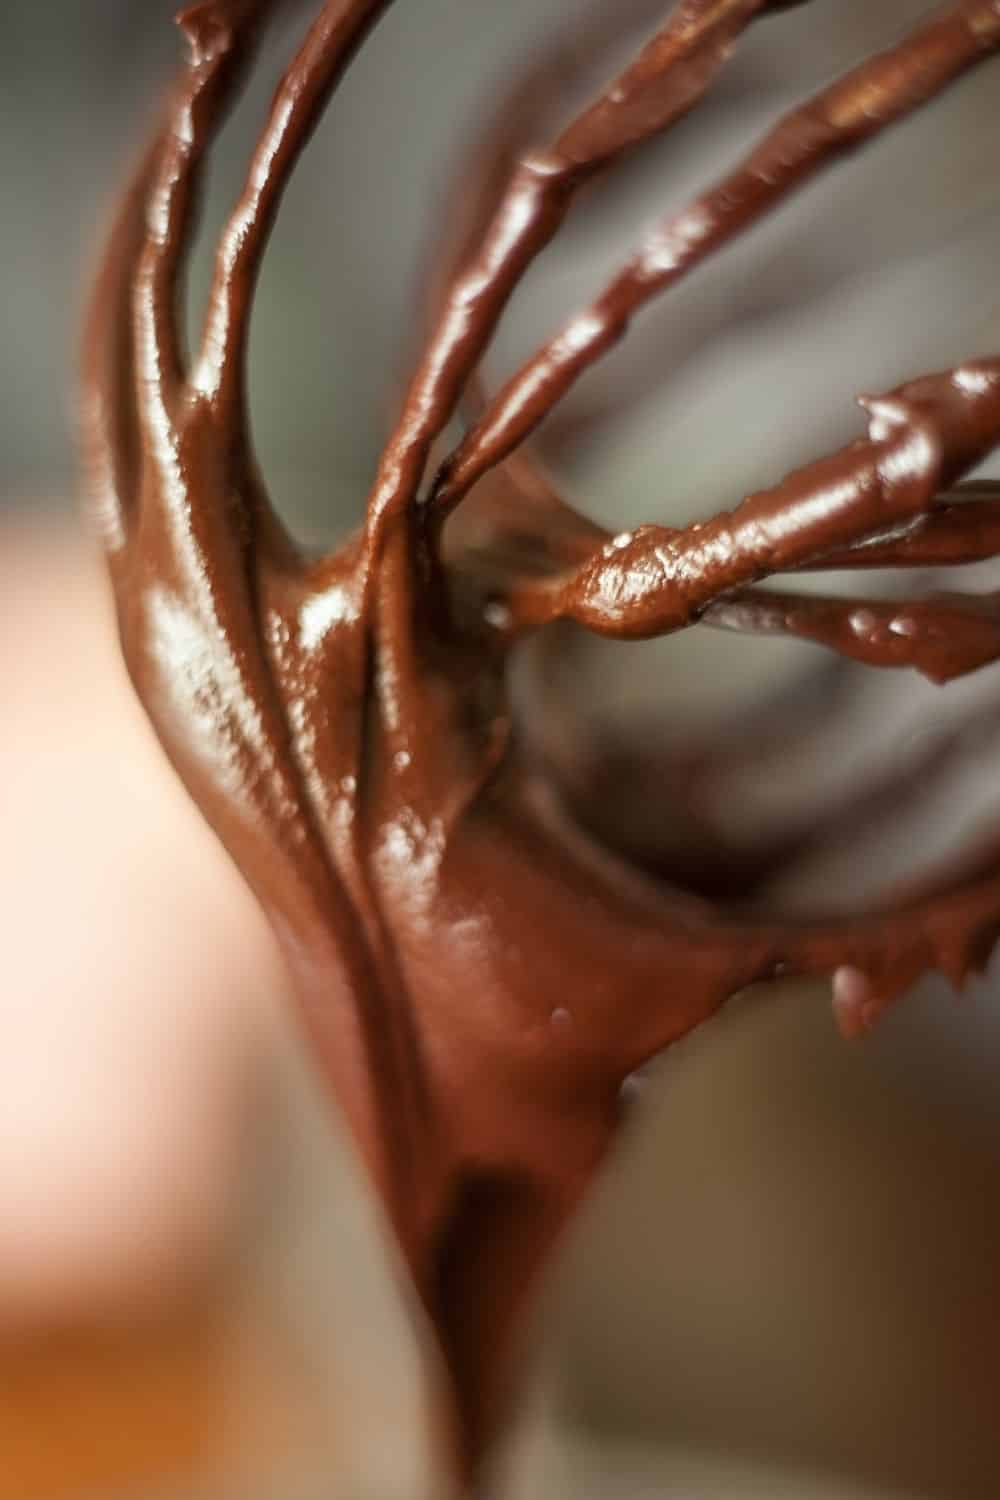 Chocolate ganache beaten for frosting